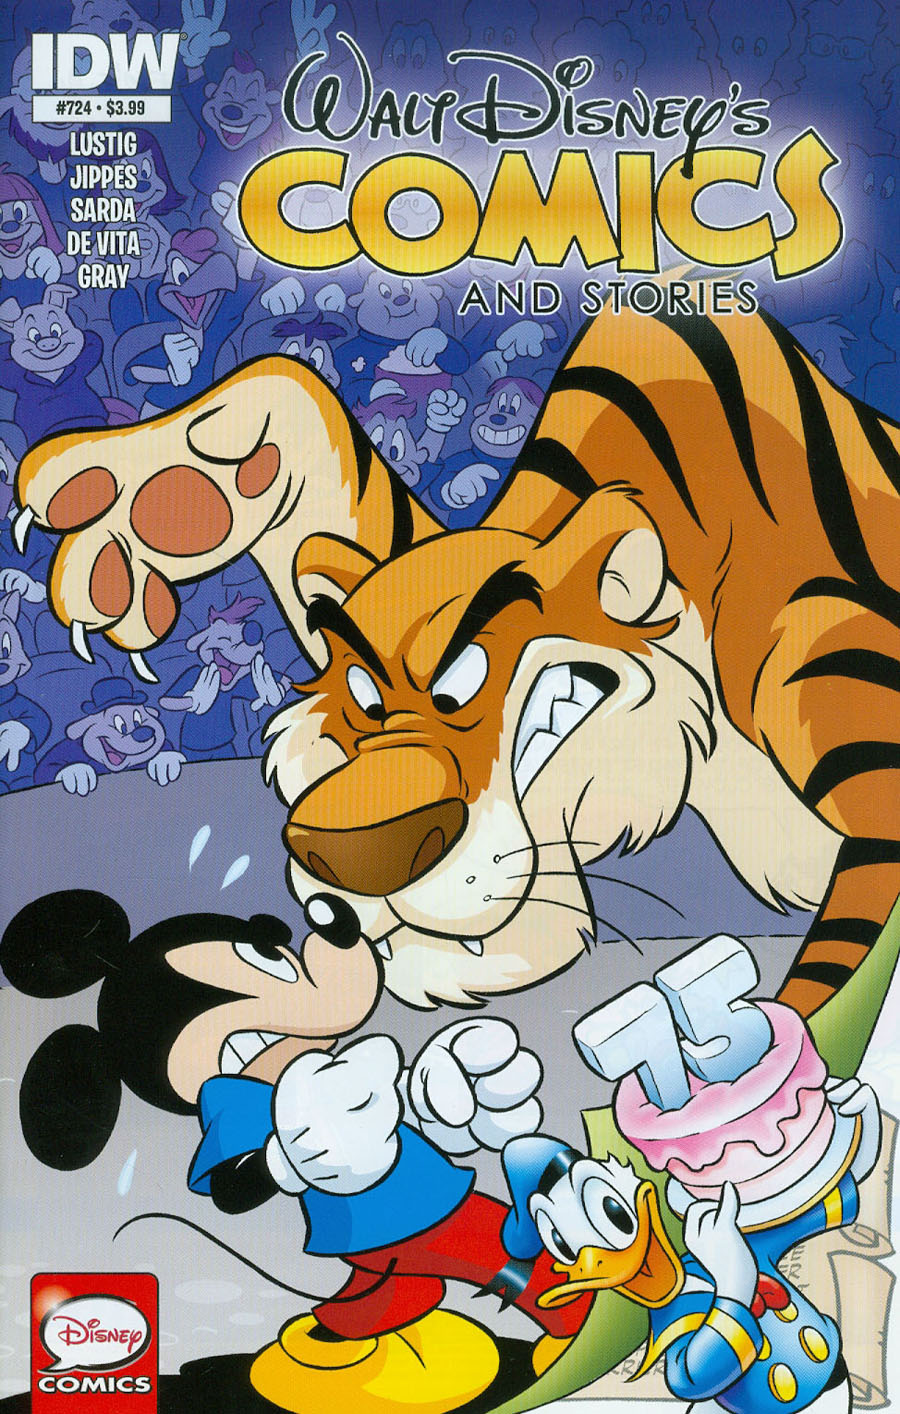 Walt Disneys Comics & Stories #724 Cover A Regular Henrieke Goorhuis Cover